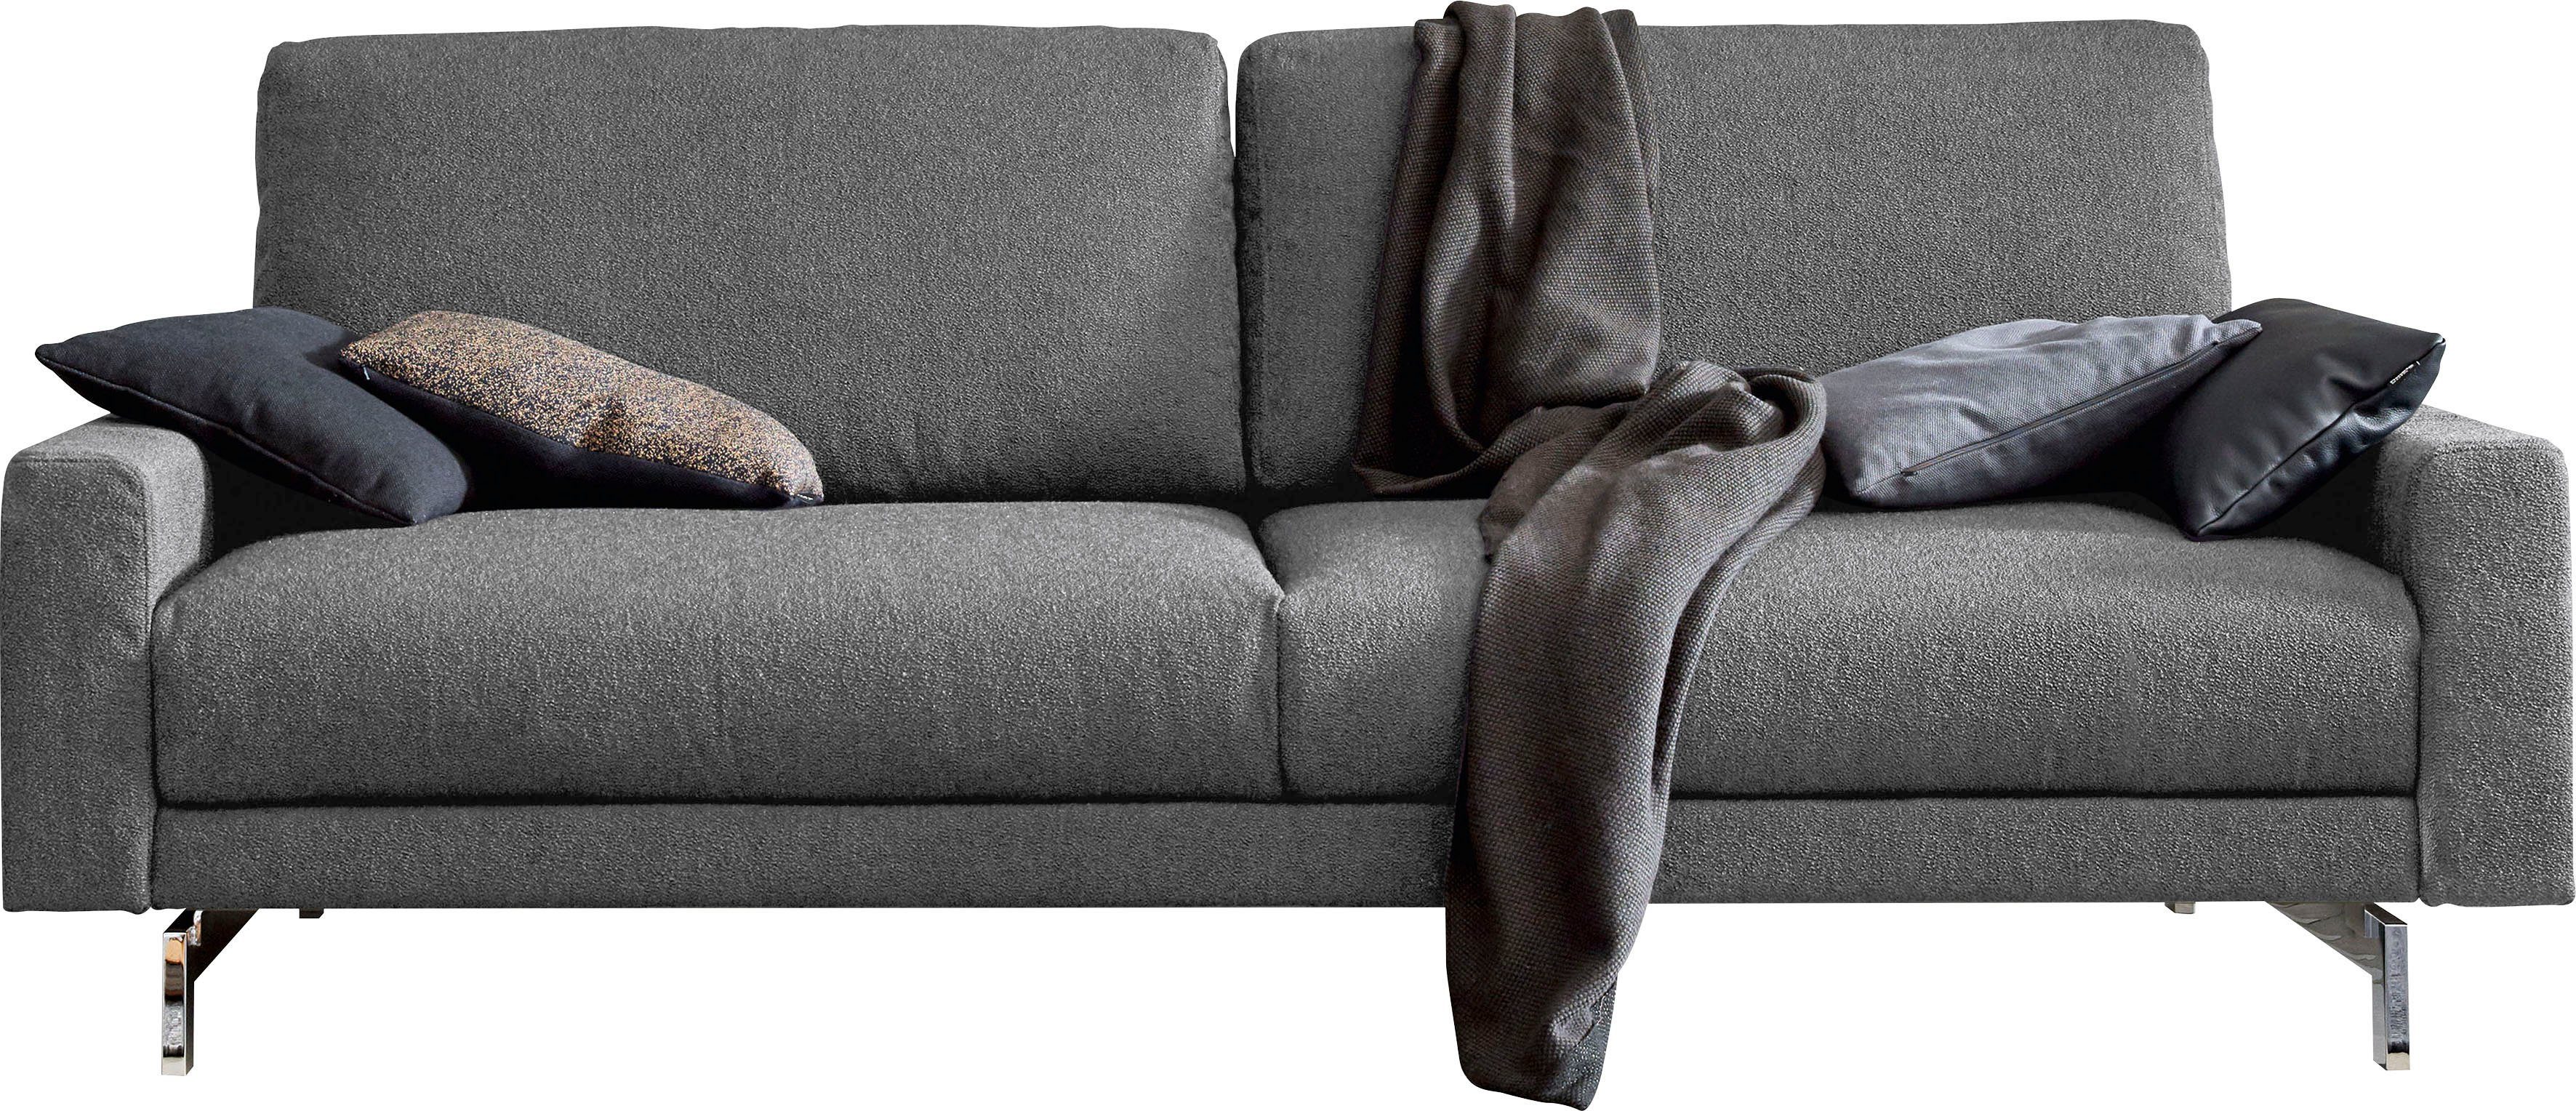 hülsta sofa 2-Sitzer hs.450, Armlehne 164 Breite chromfarben glänzend, niedrig, Fuß cm